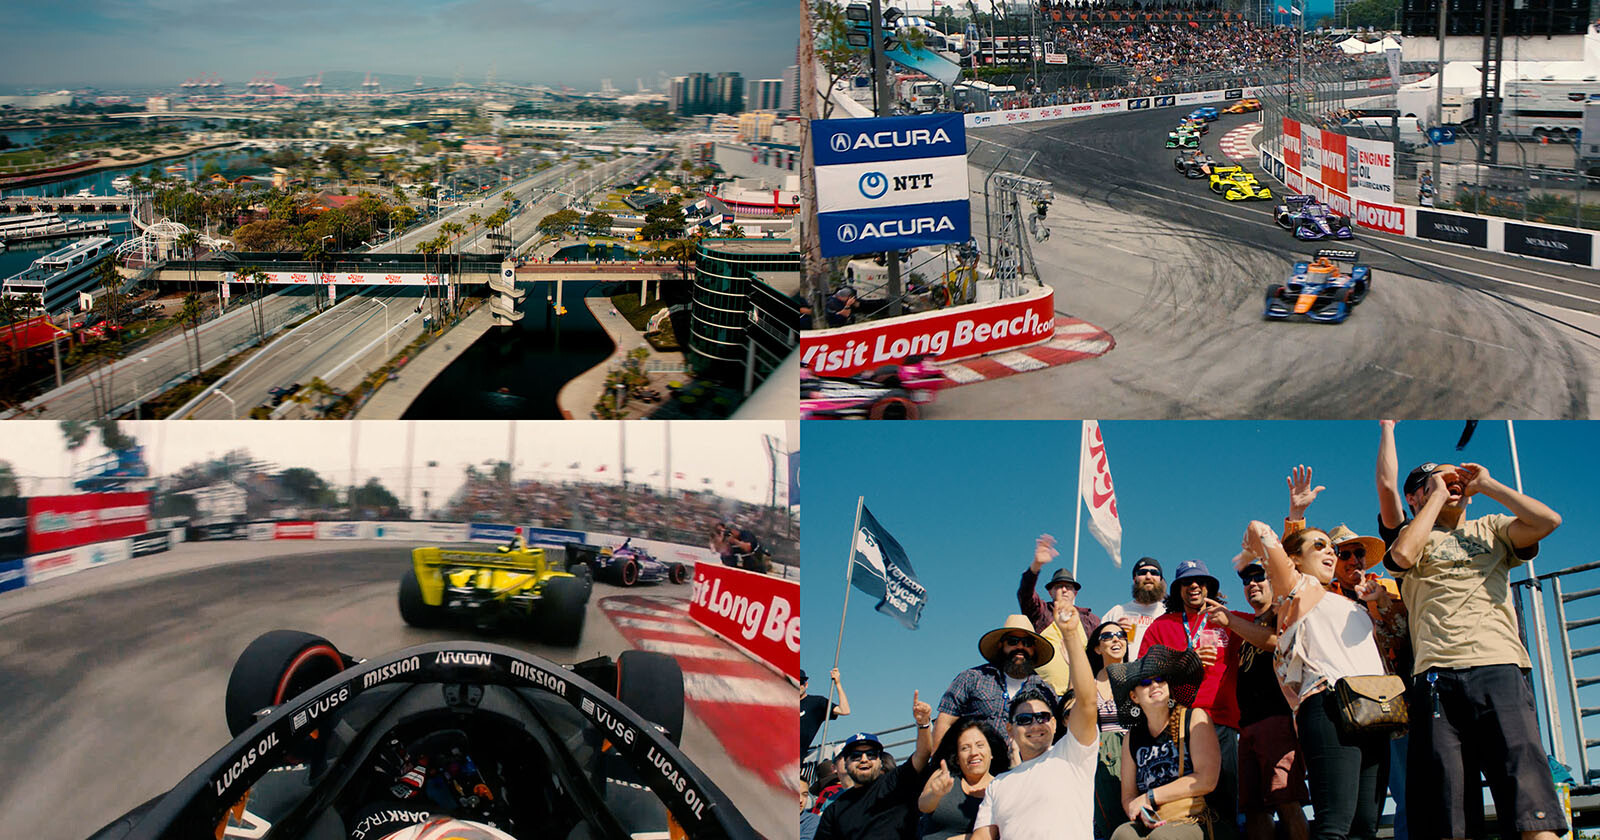 Hyperlapse Miniature Film Captures the Joy of the Long Beach Grand Prix